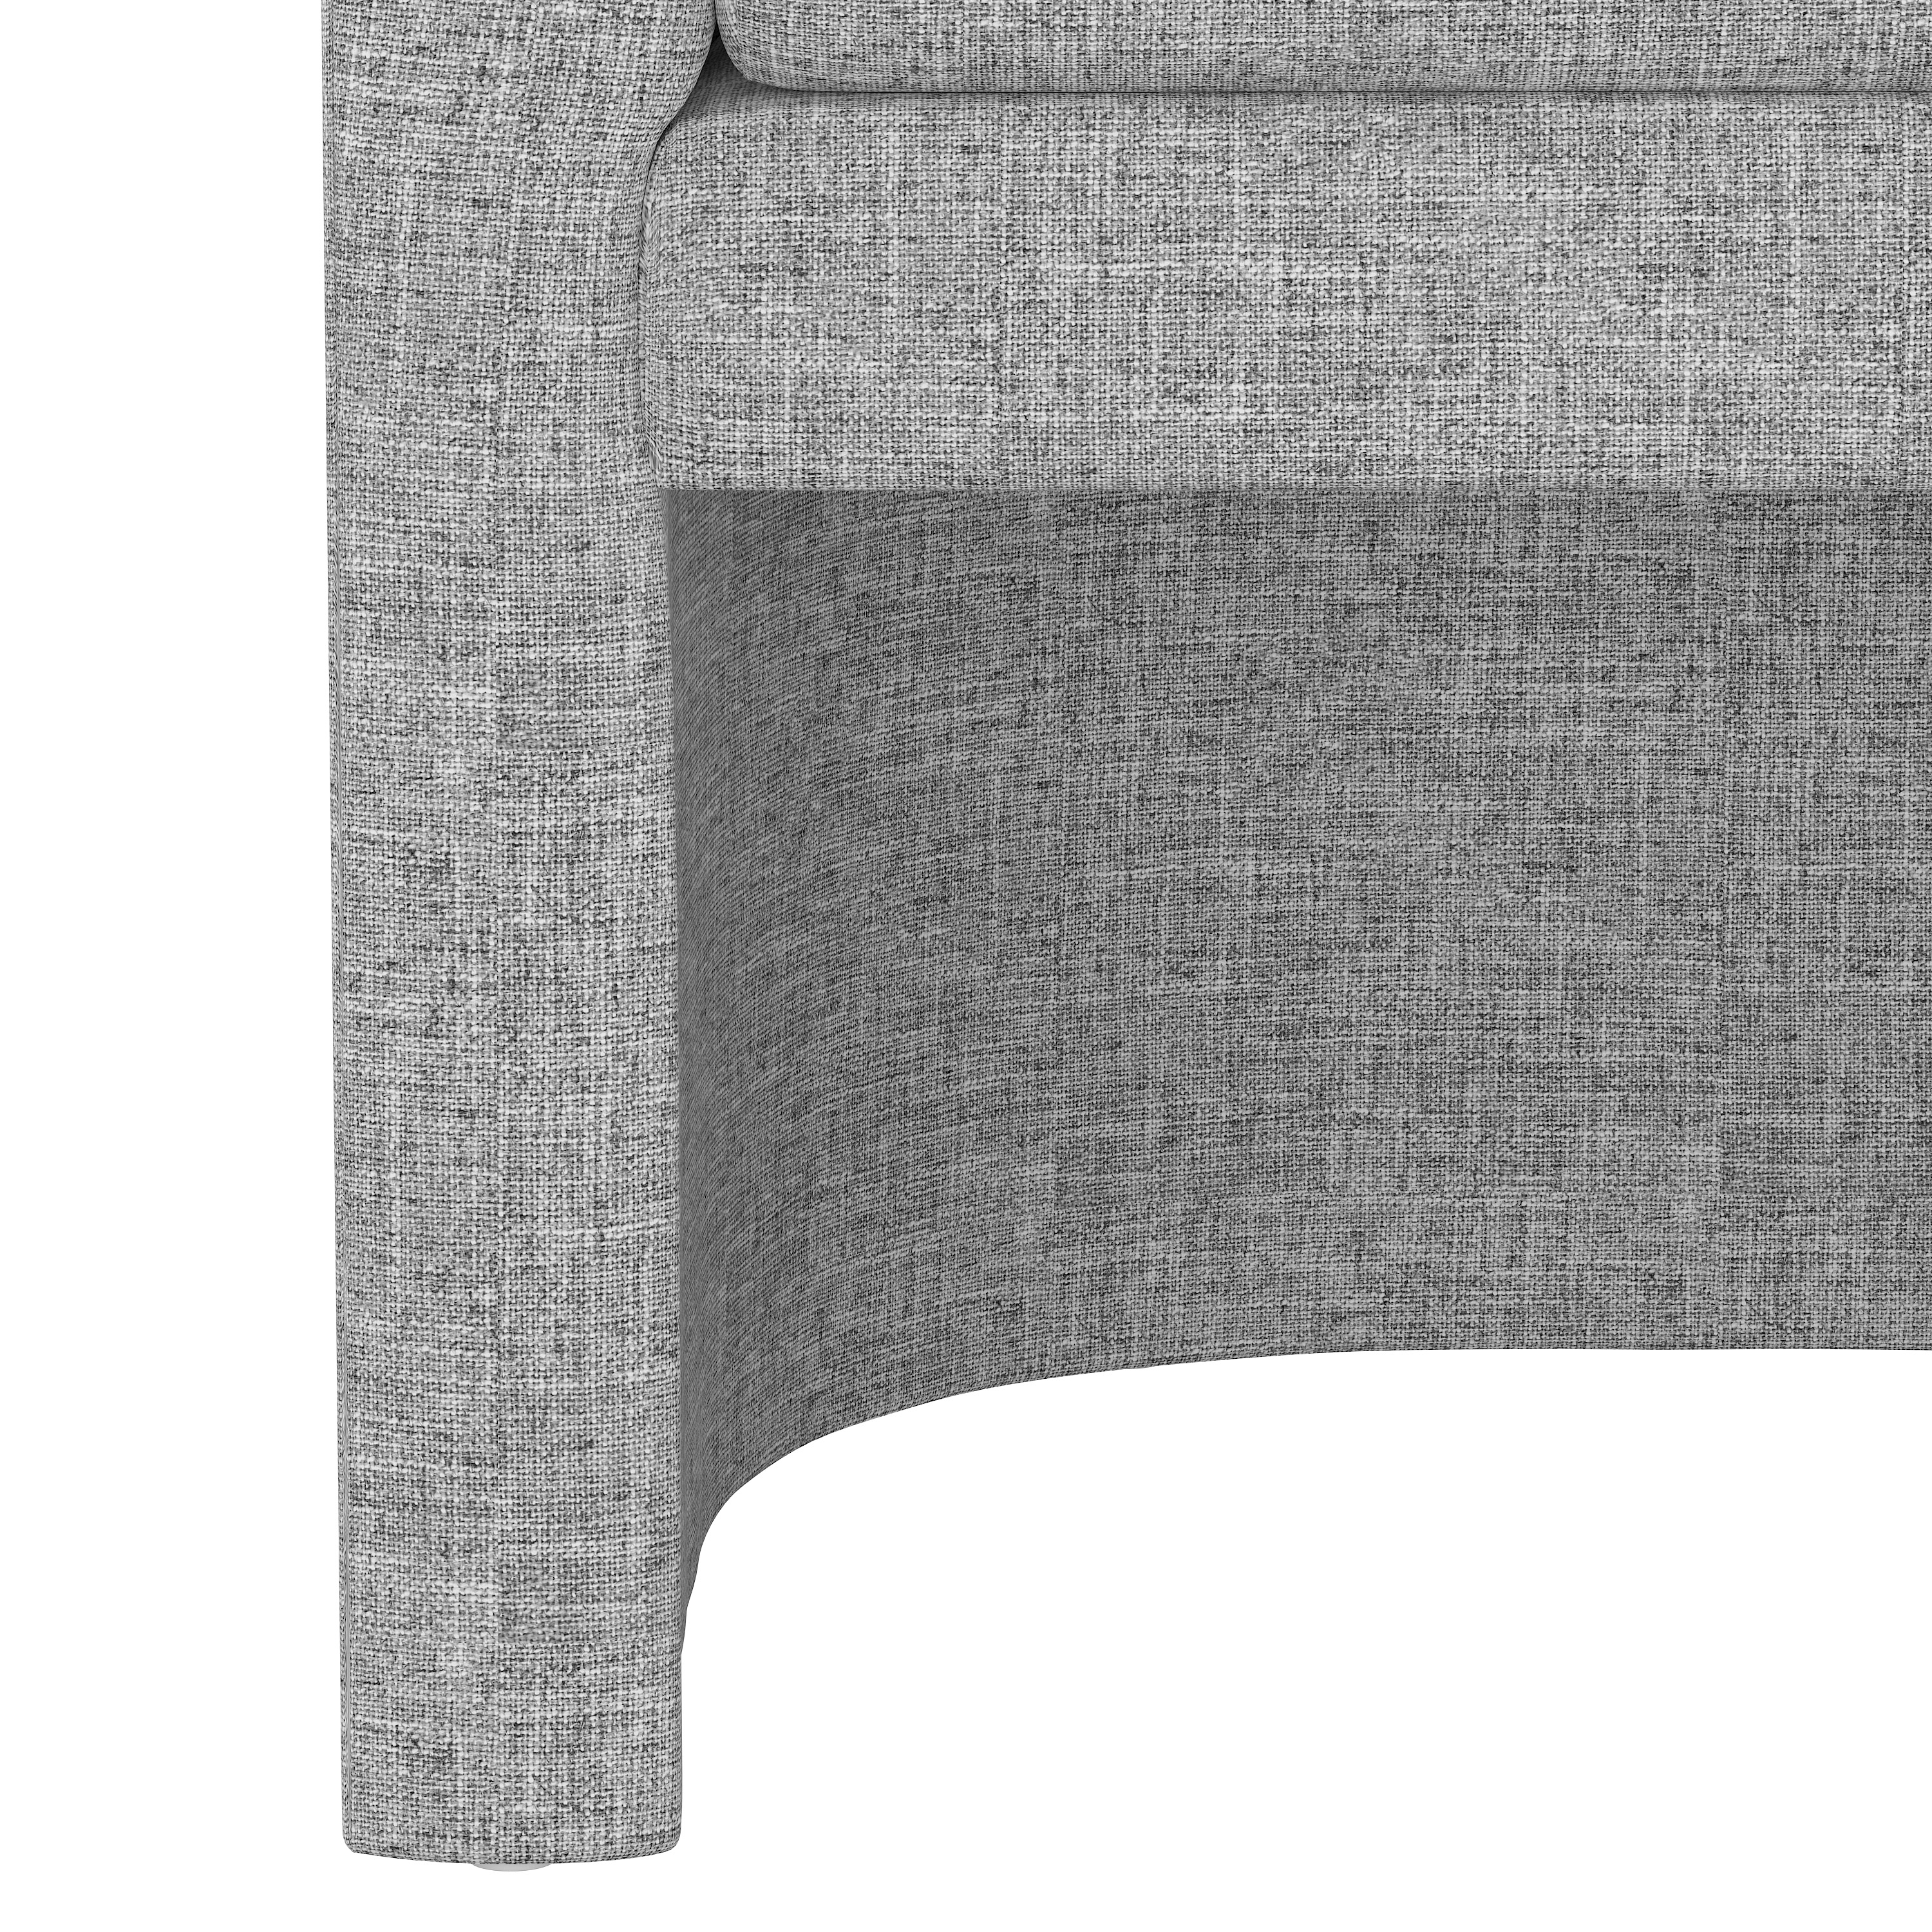 Wellshire Chair, Pumice Linen - Image 4